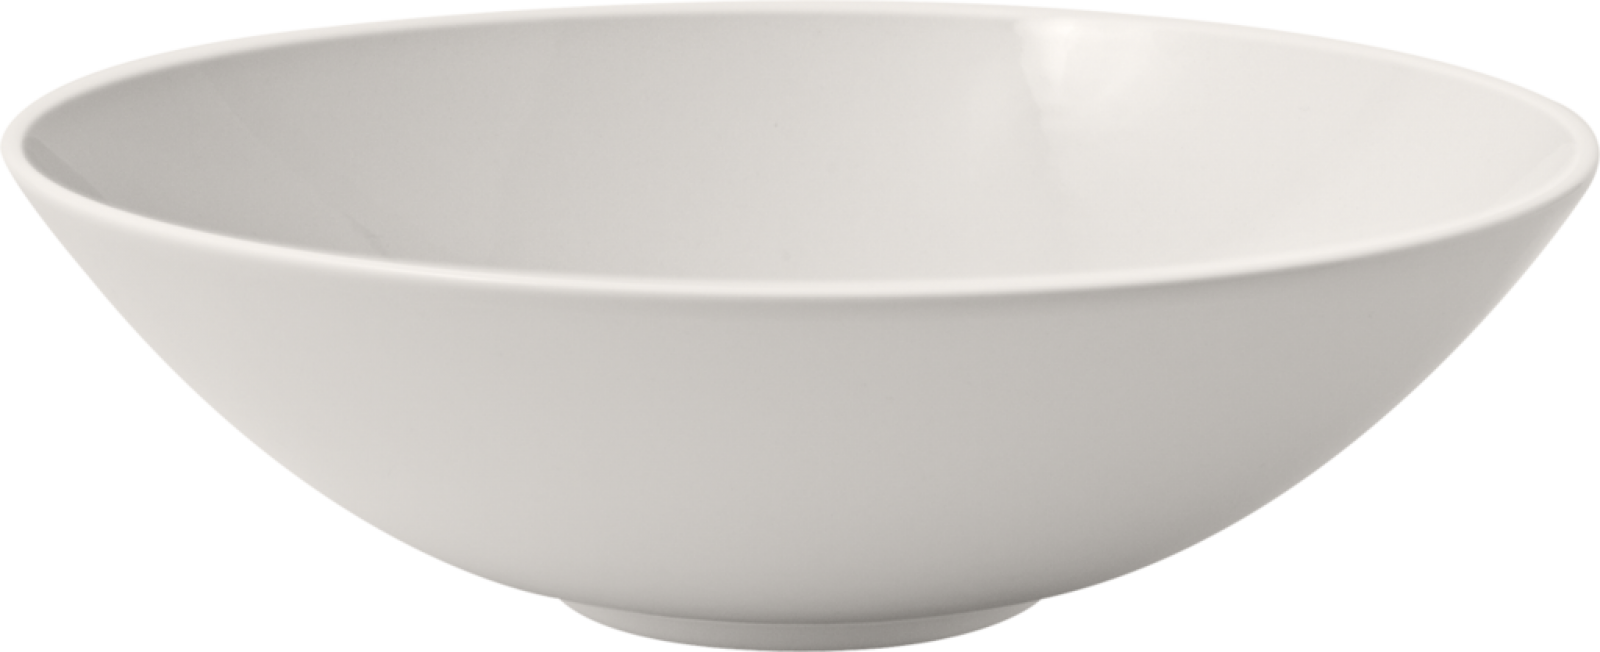 Iconic, White Bowl